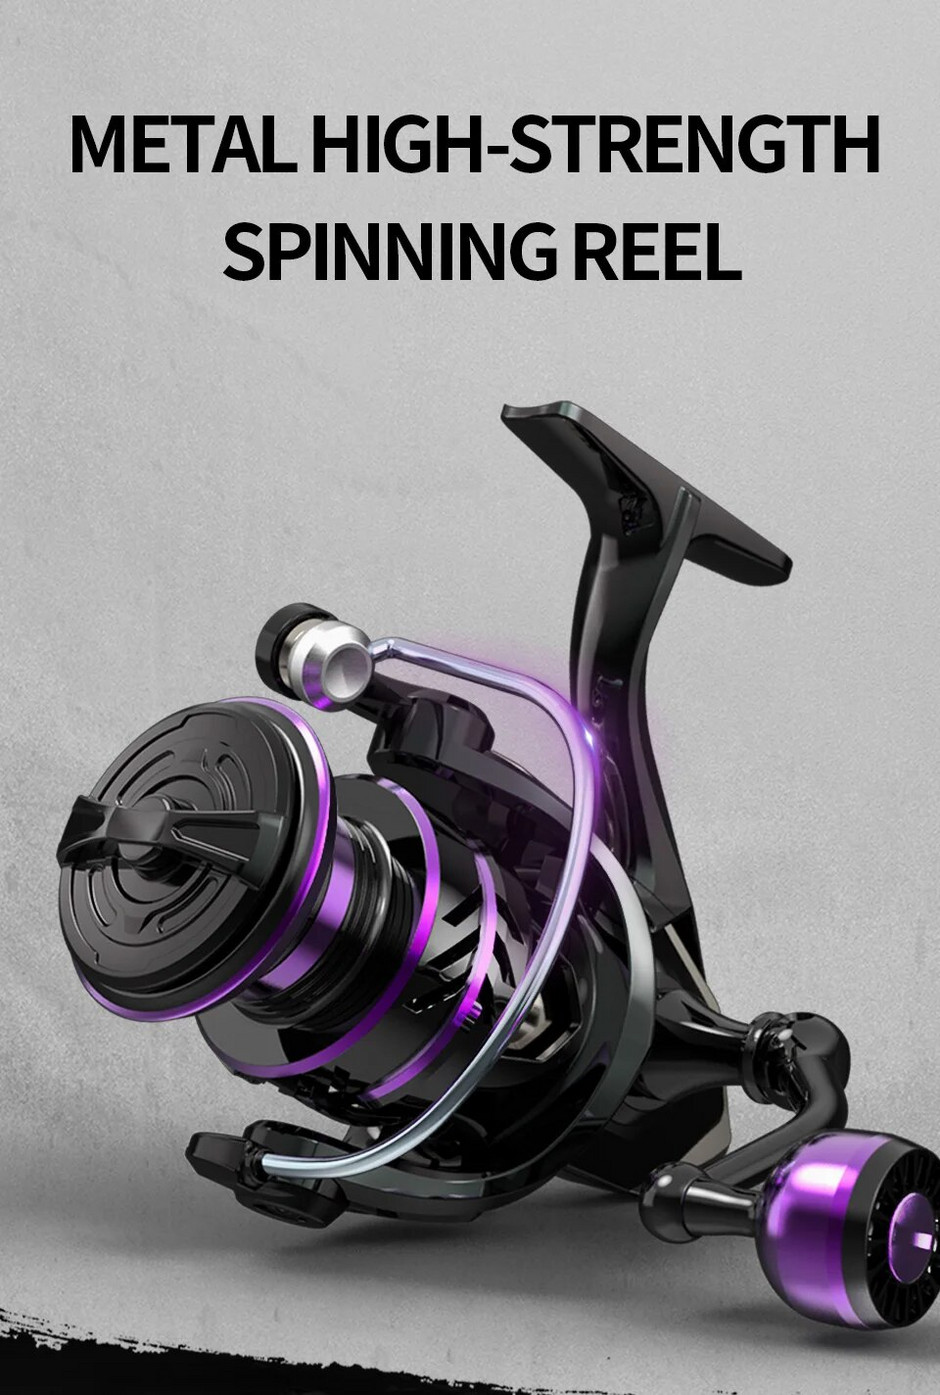 LINNHUE Spinning Baitcaster Spinning Reel With Metal EVA Grip, Max